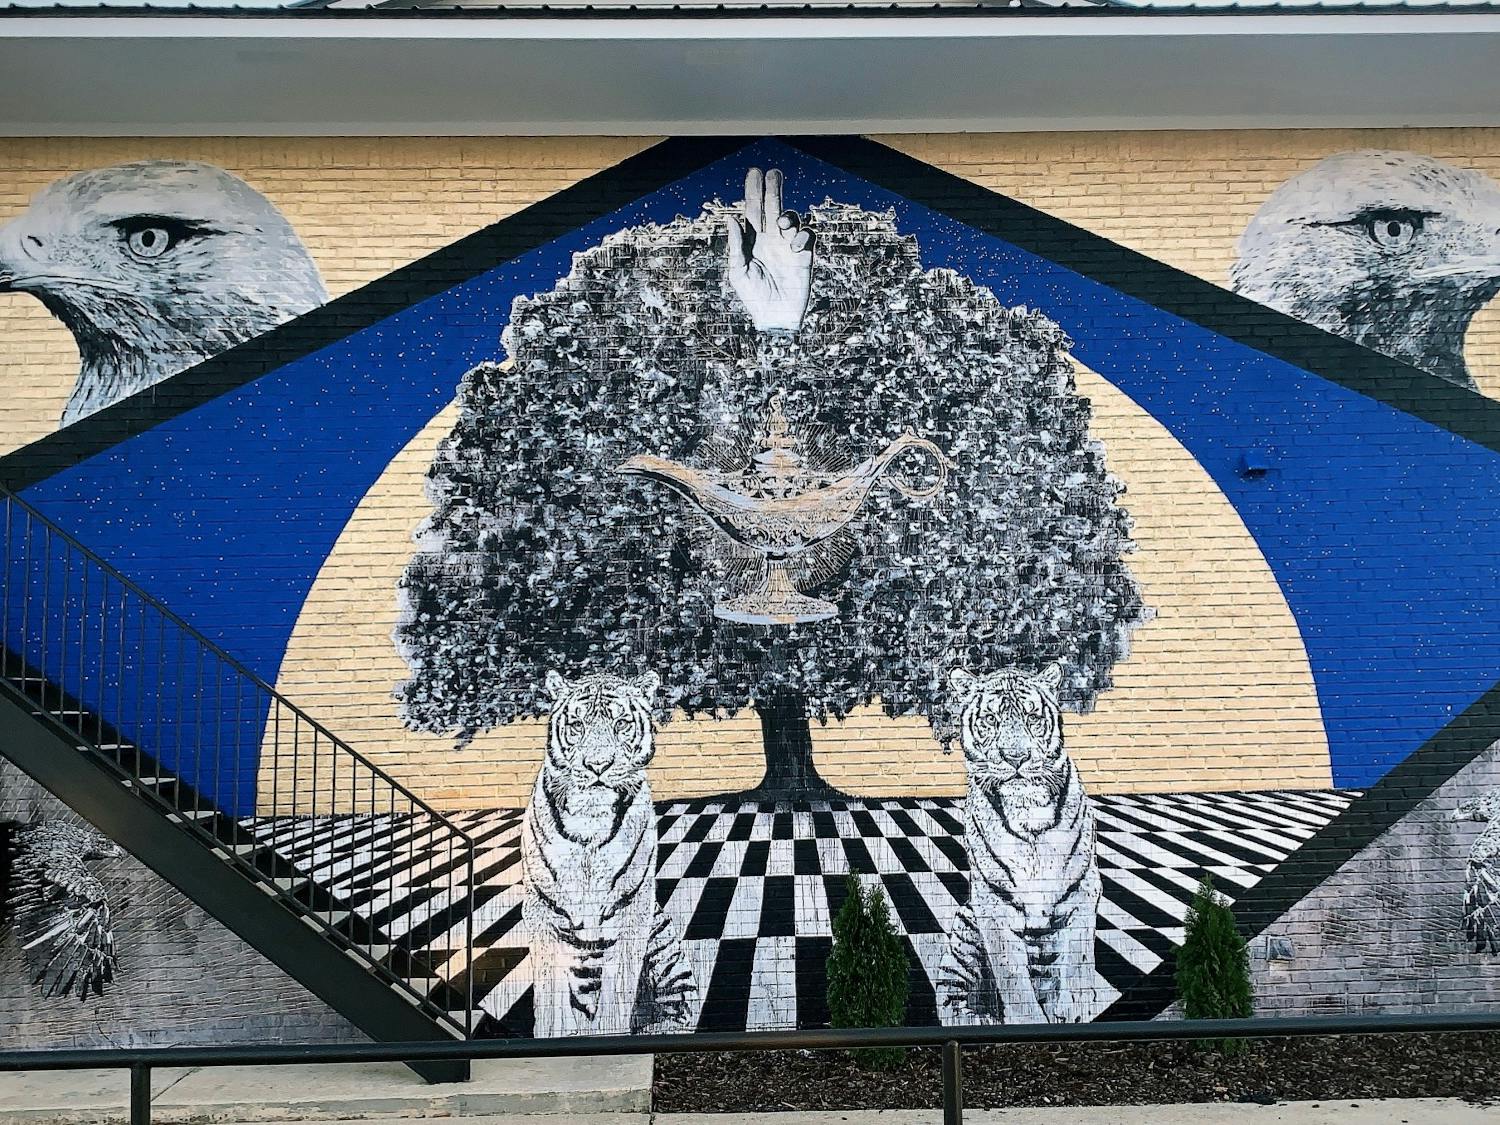 R.C. Hagans mural is located on 123 N. Donahue Drive in Auburn, Ala.&nbsp;